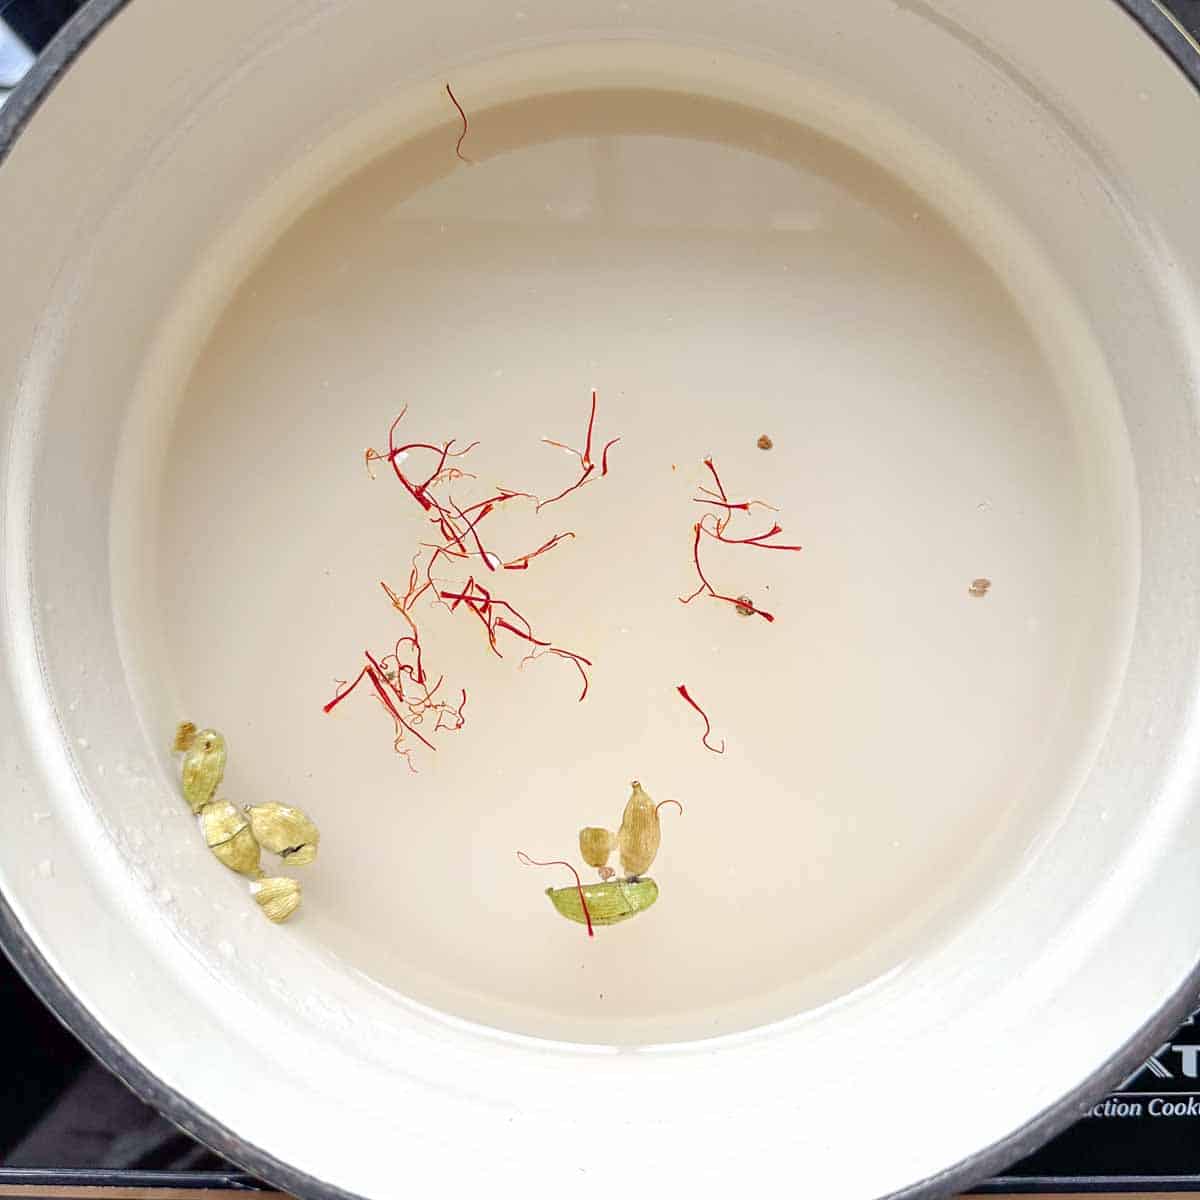 Pot with gulab jamun syrup ingredients like saffron, sugar, water, and cardamom